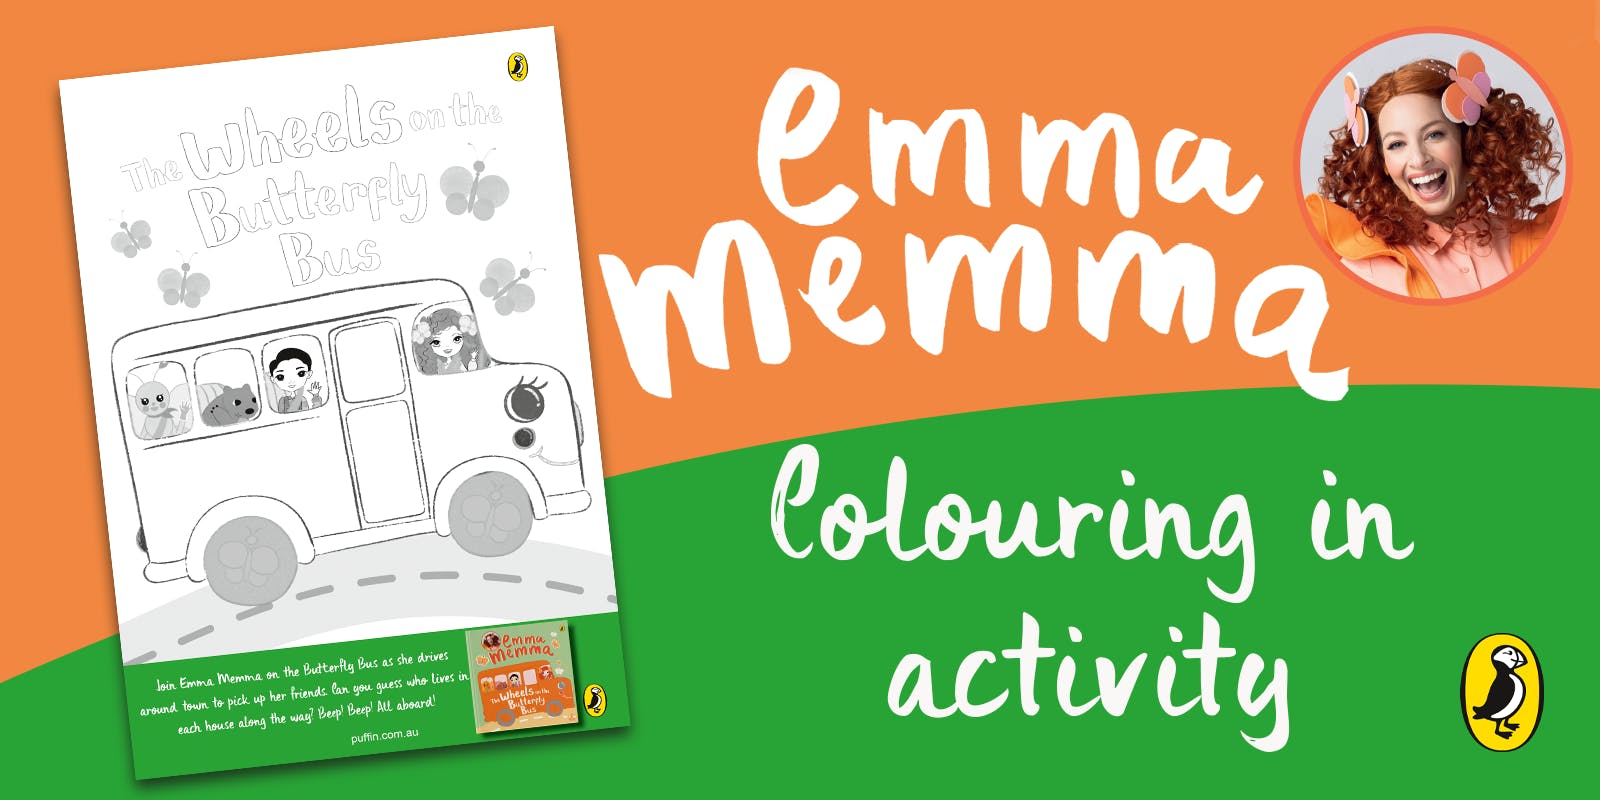 Emma Memma colouring-in activity